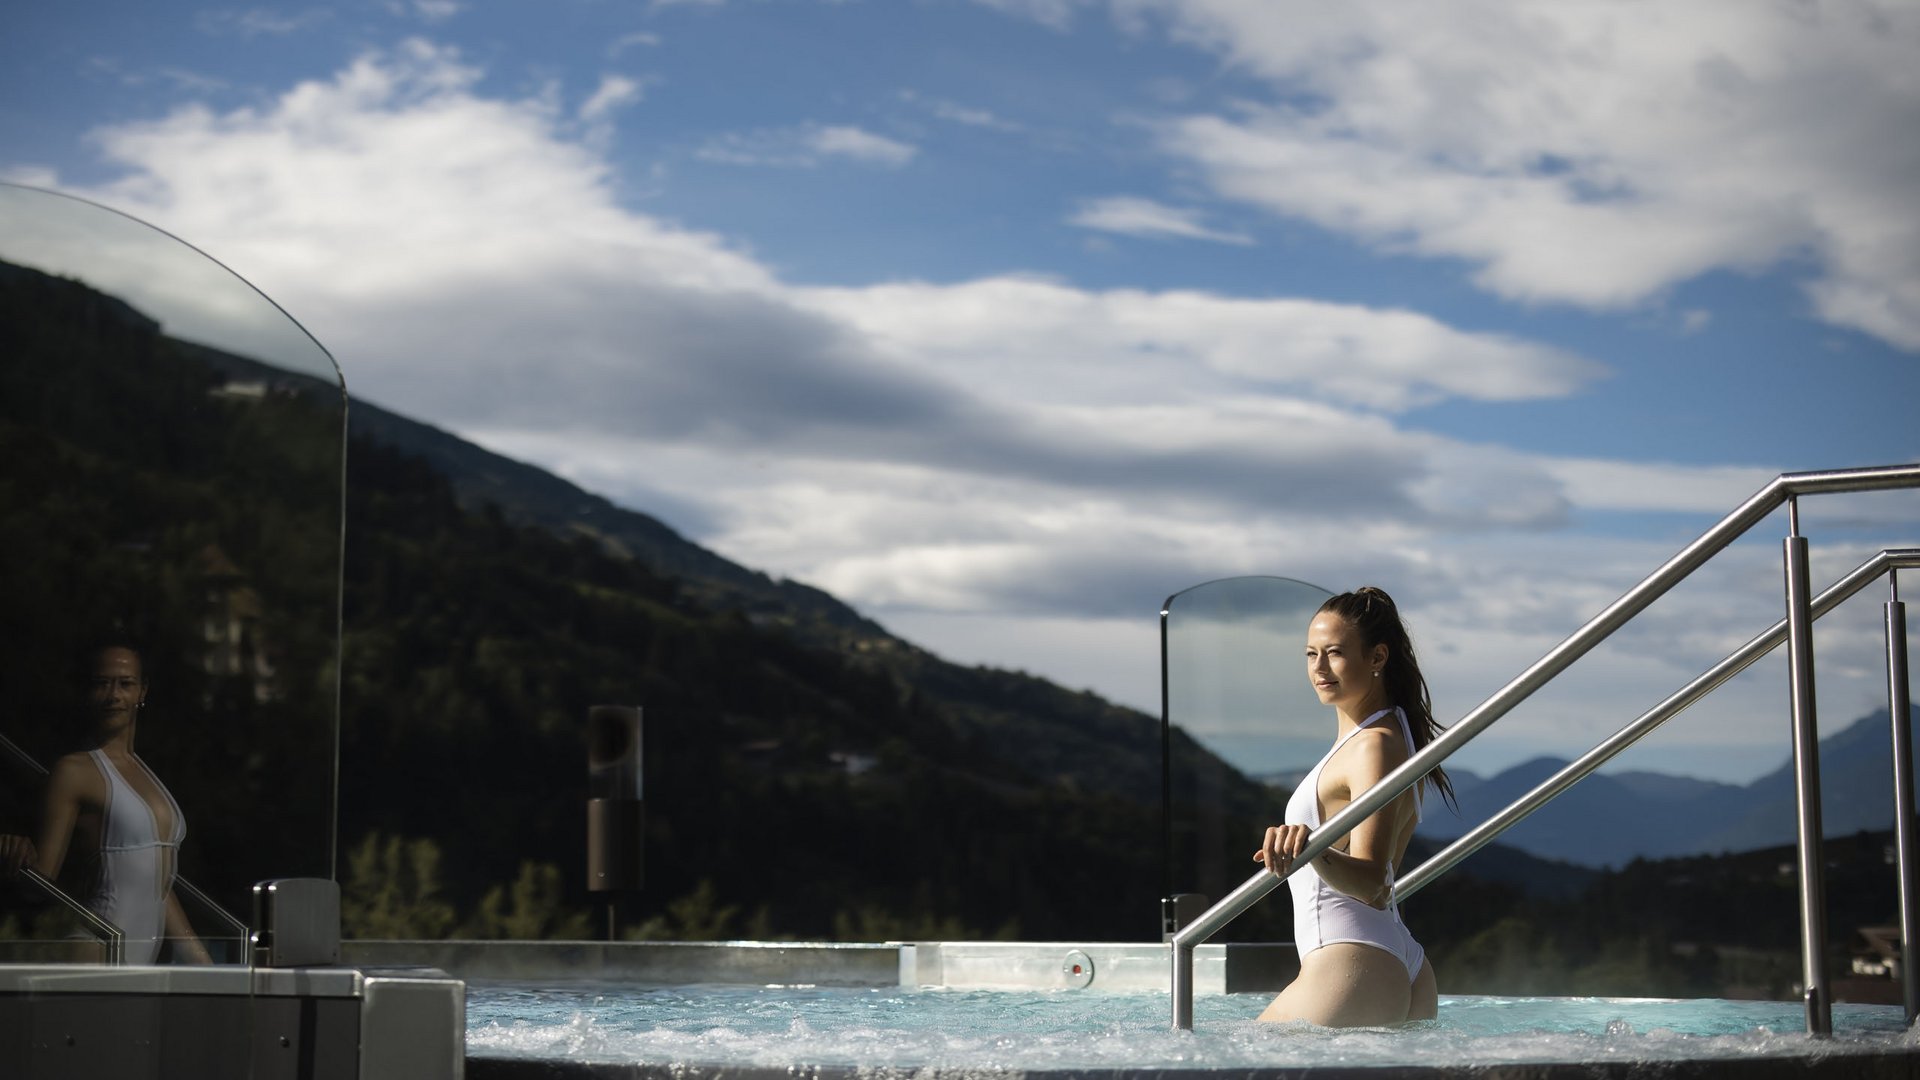 Il vostrohotel wellness in Alto Adige a 5 stelle